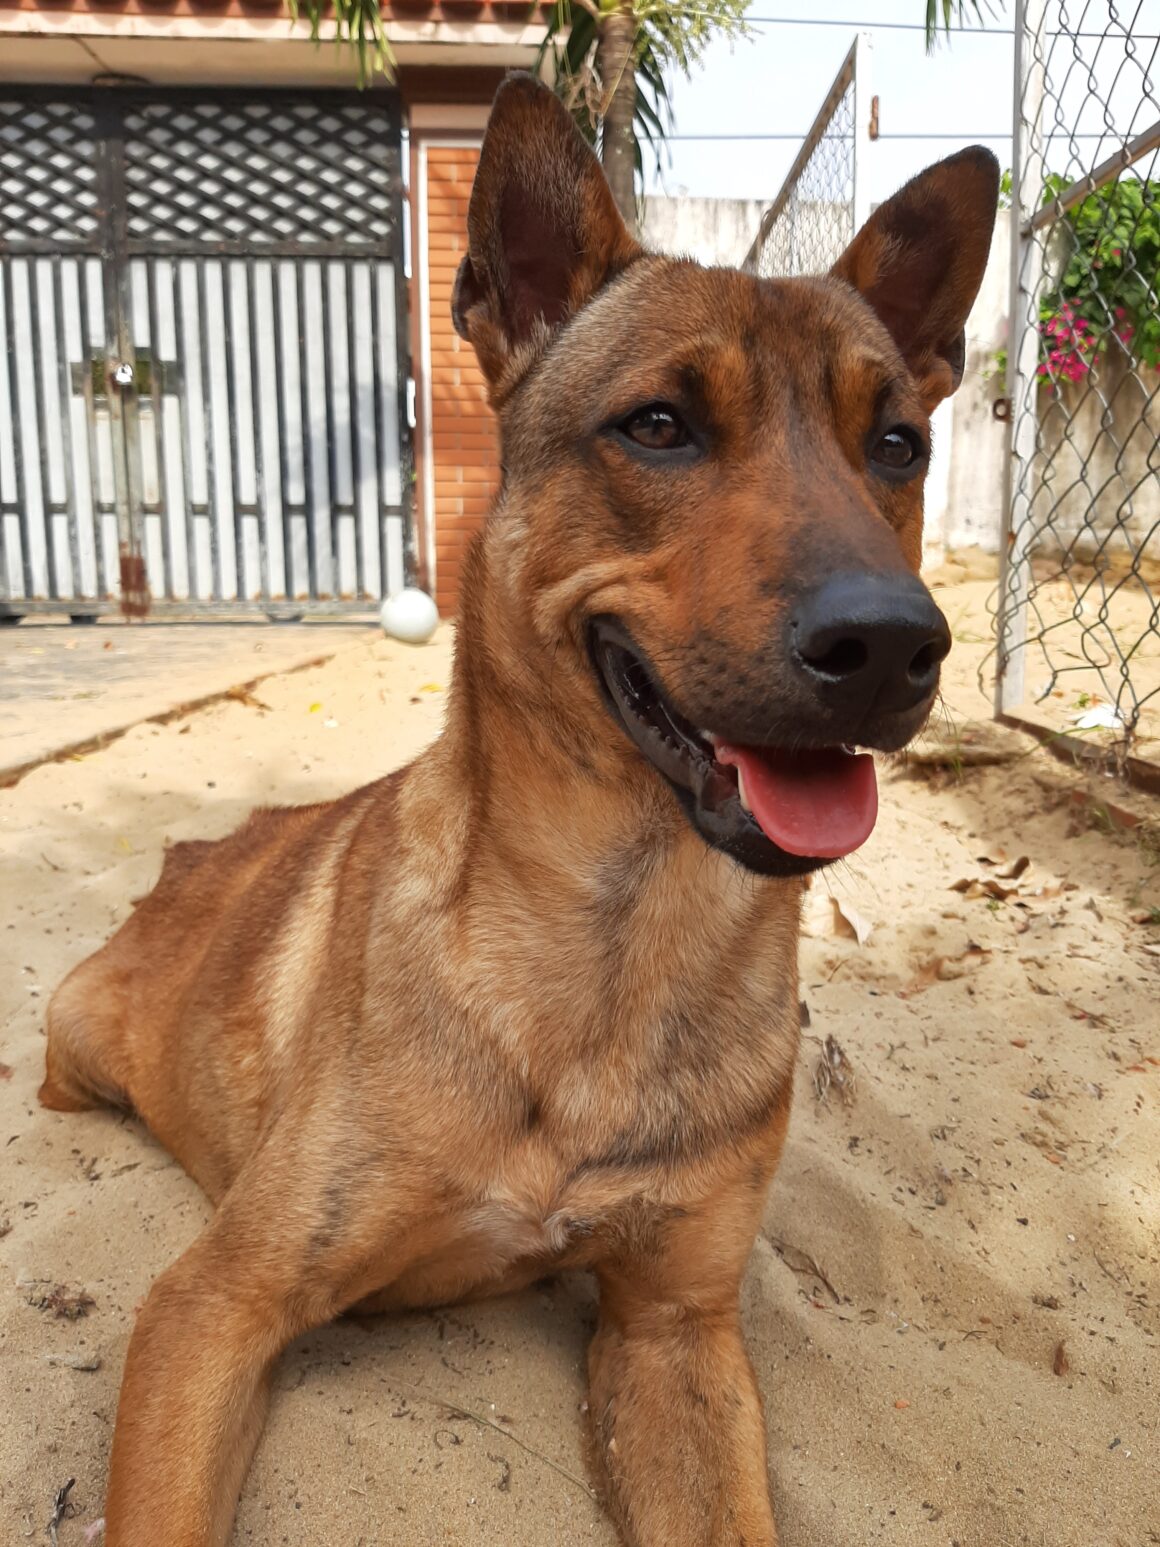 Adopt Jackpot | Dog adoption Vietnam Animal Aid and Rescue